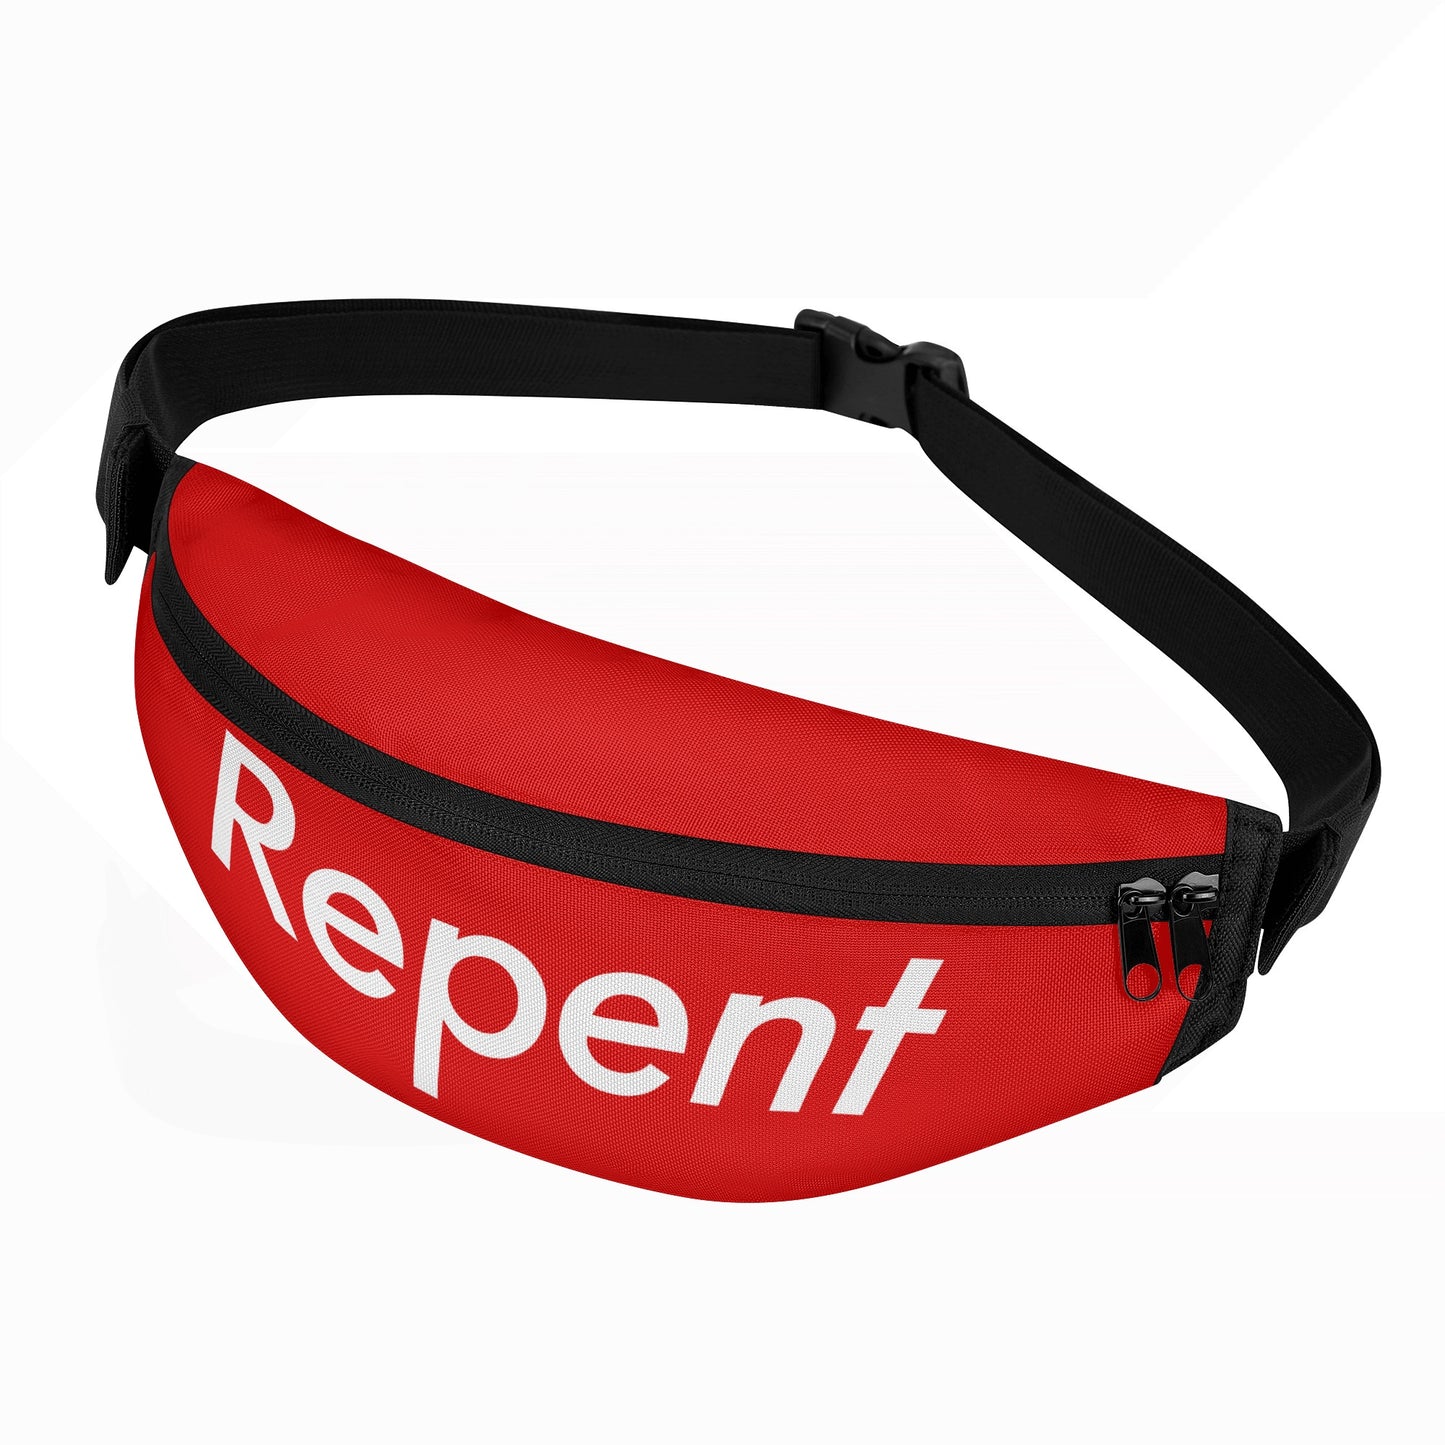 Repent Medium Waist Pack / Fanny Pack